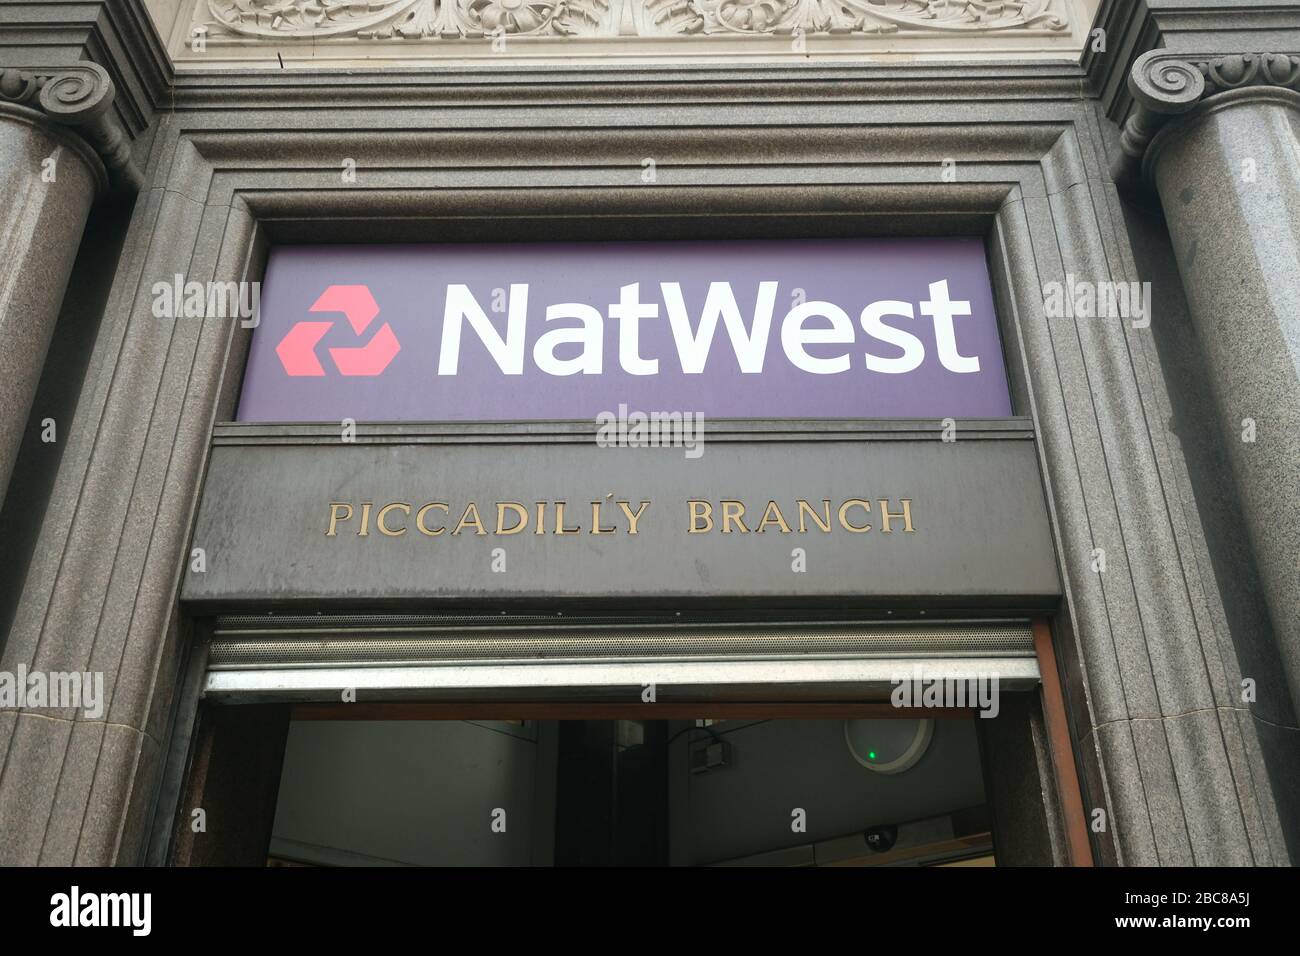 Natwest- British hgih street bank branch, exterior logo / signage- London Stock Photo